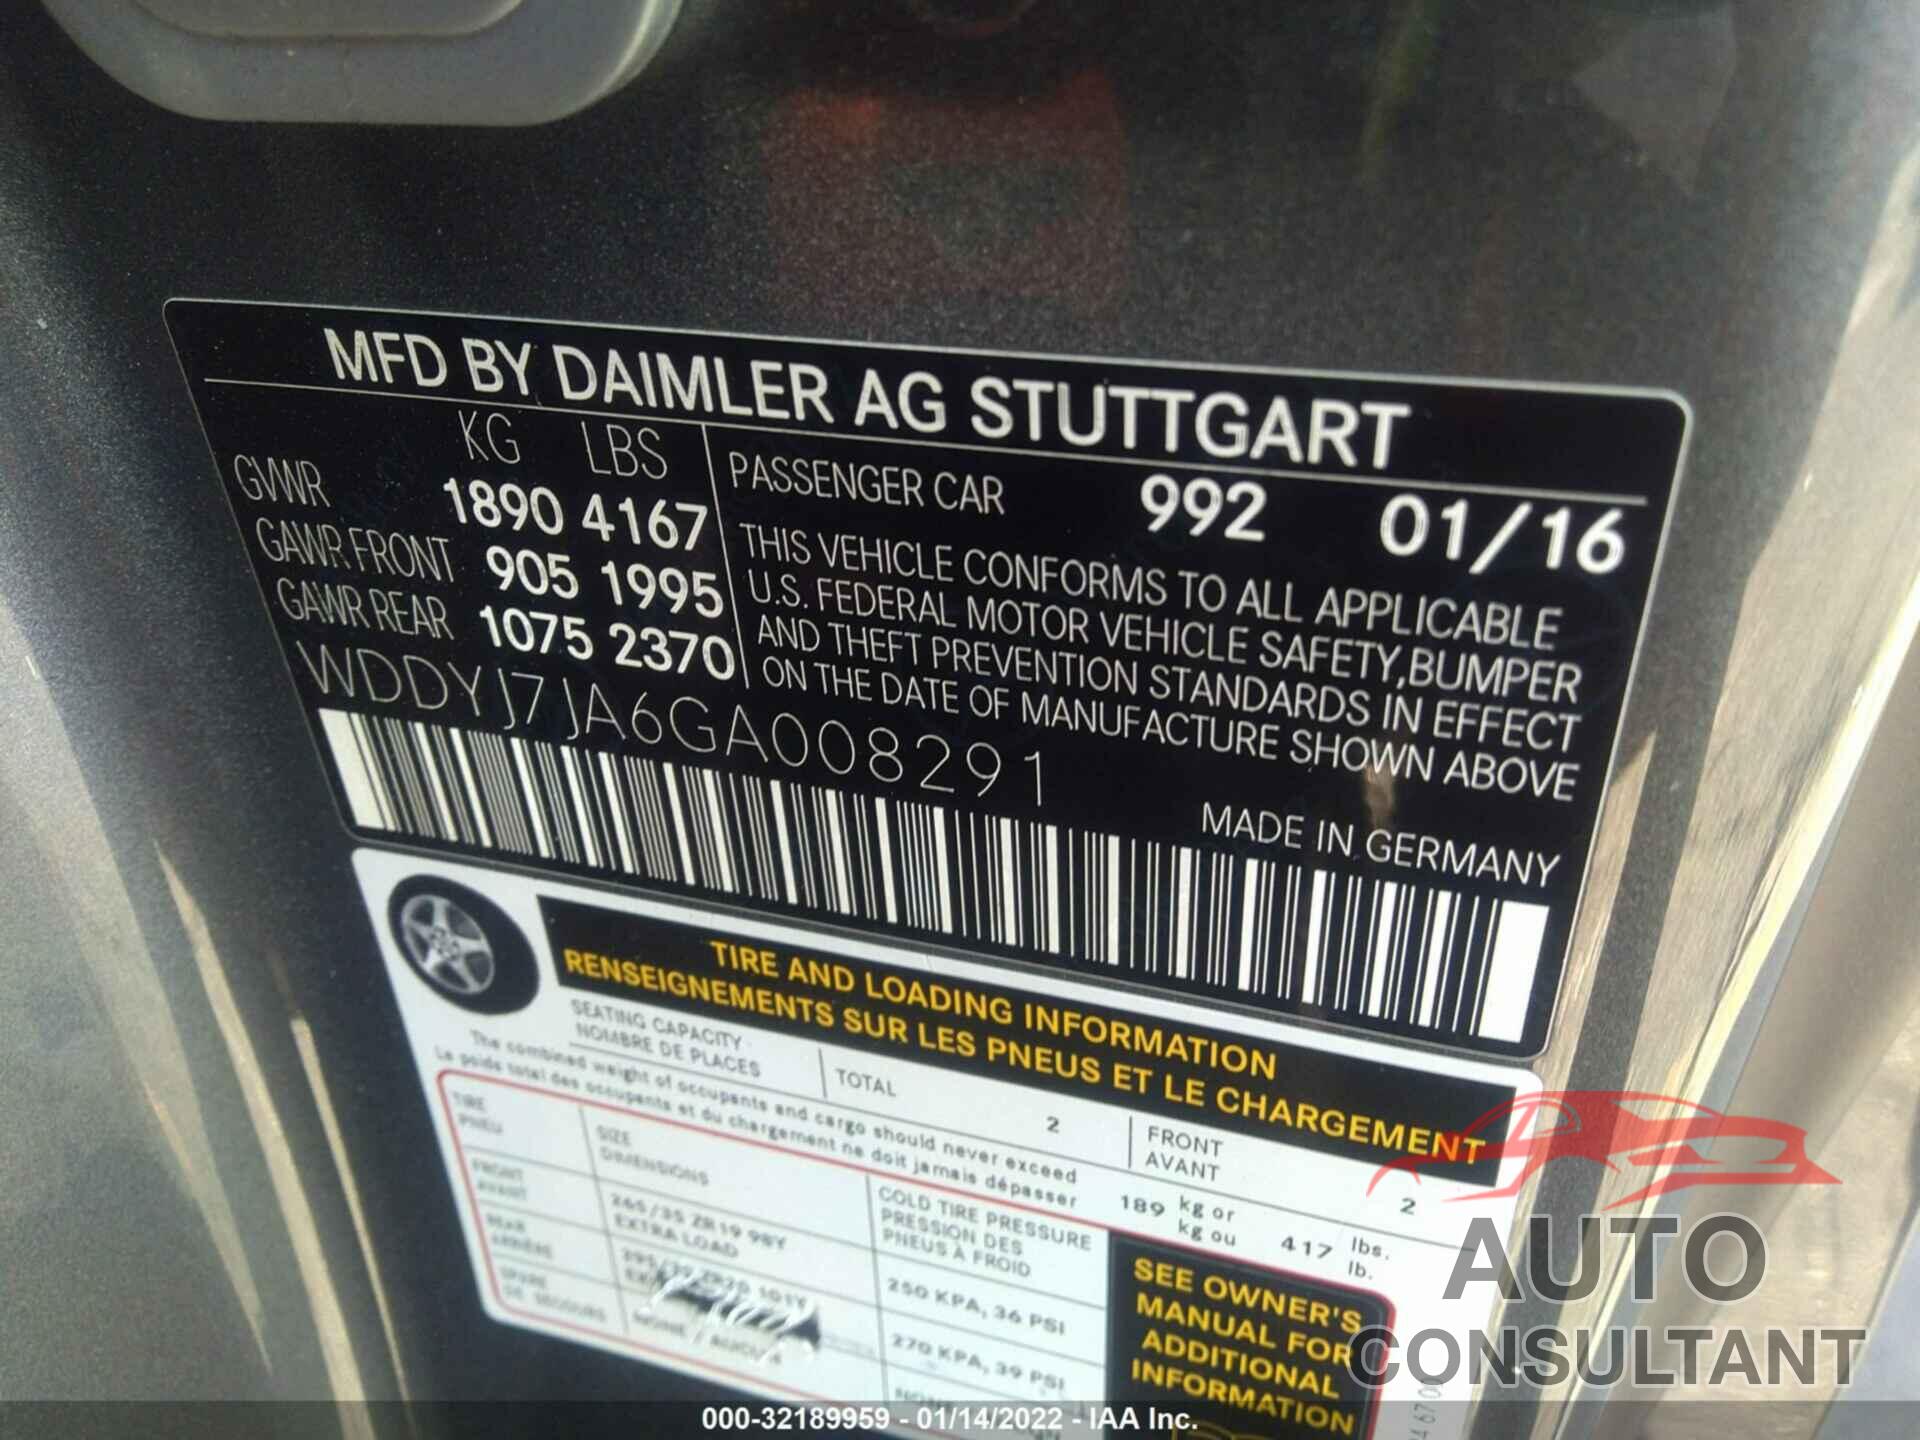 MERCEDES-BENZ AMG GT 2016 - WDDYJ7JA6GA008291